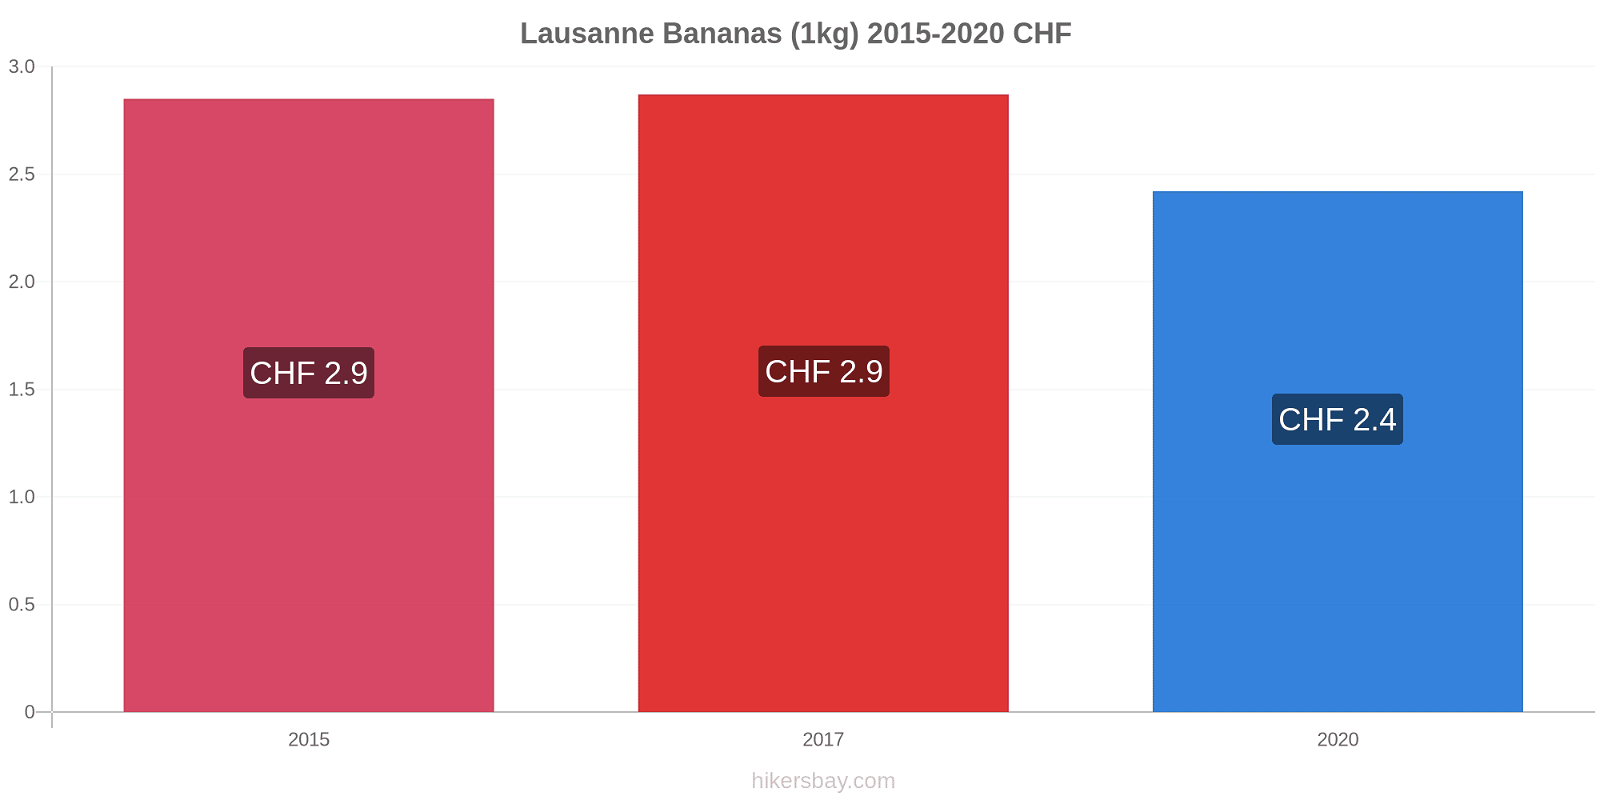 Lausanne price changes Bananas (1kg) hikersbay.com